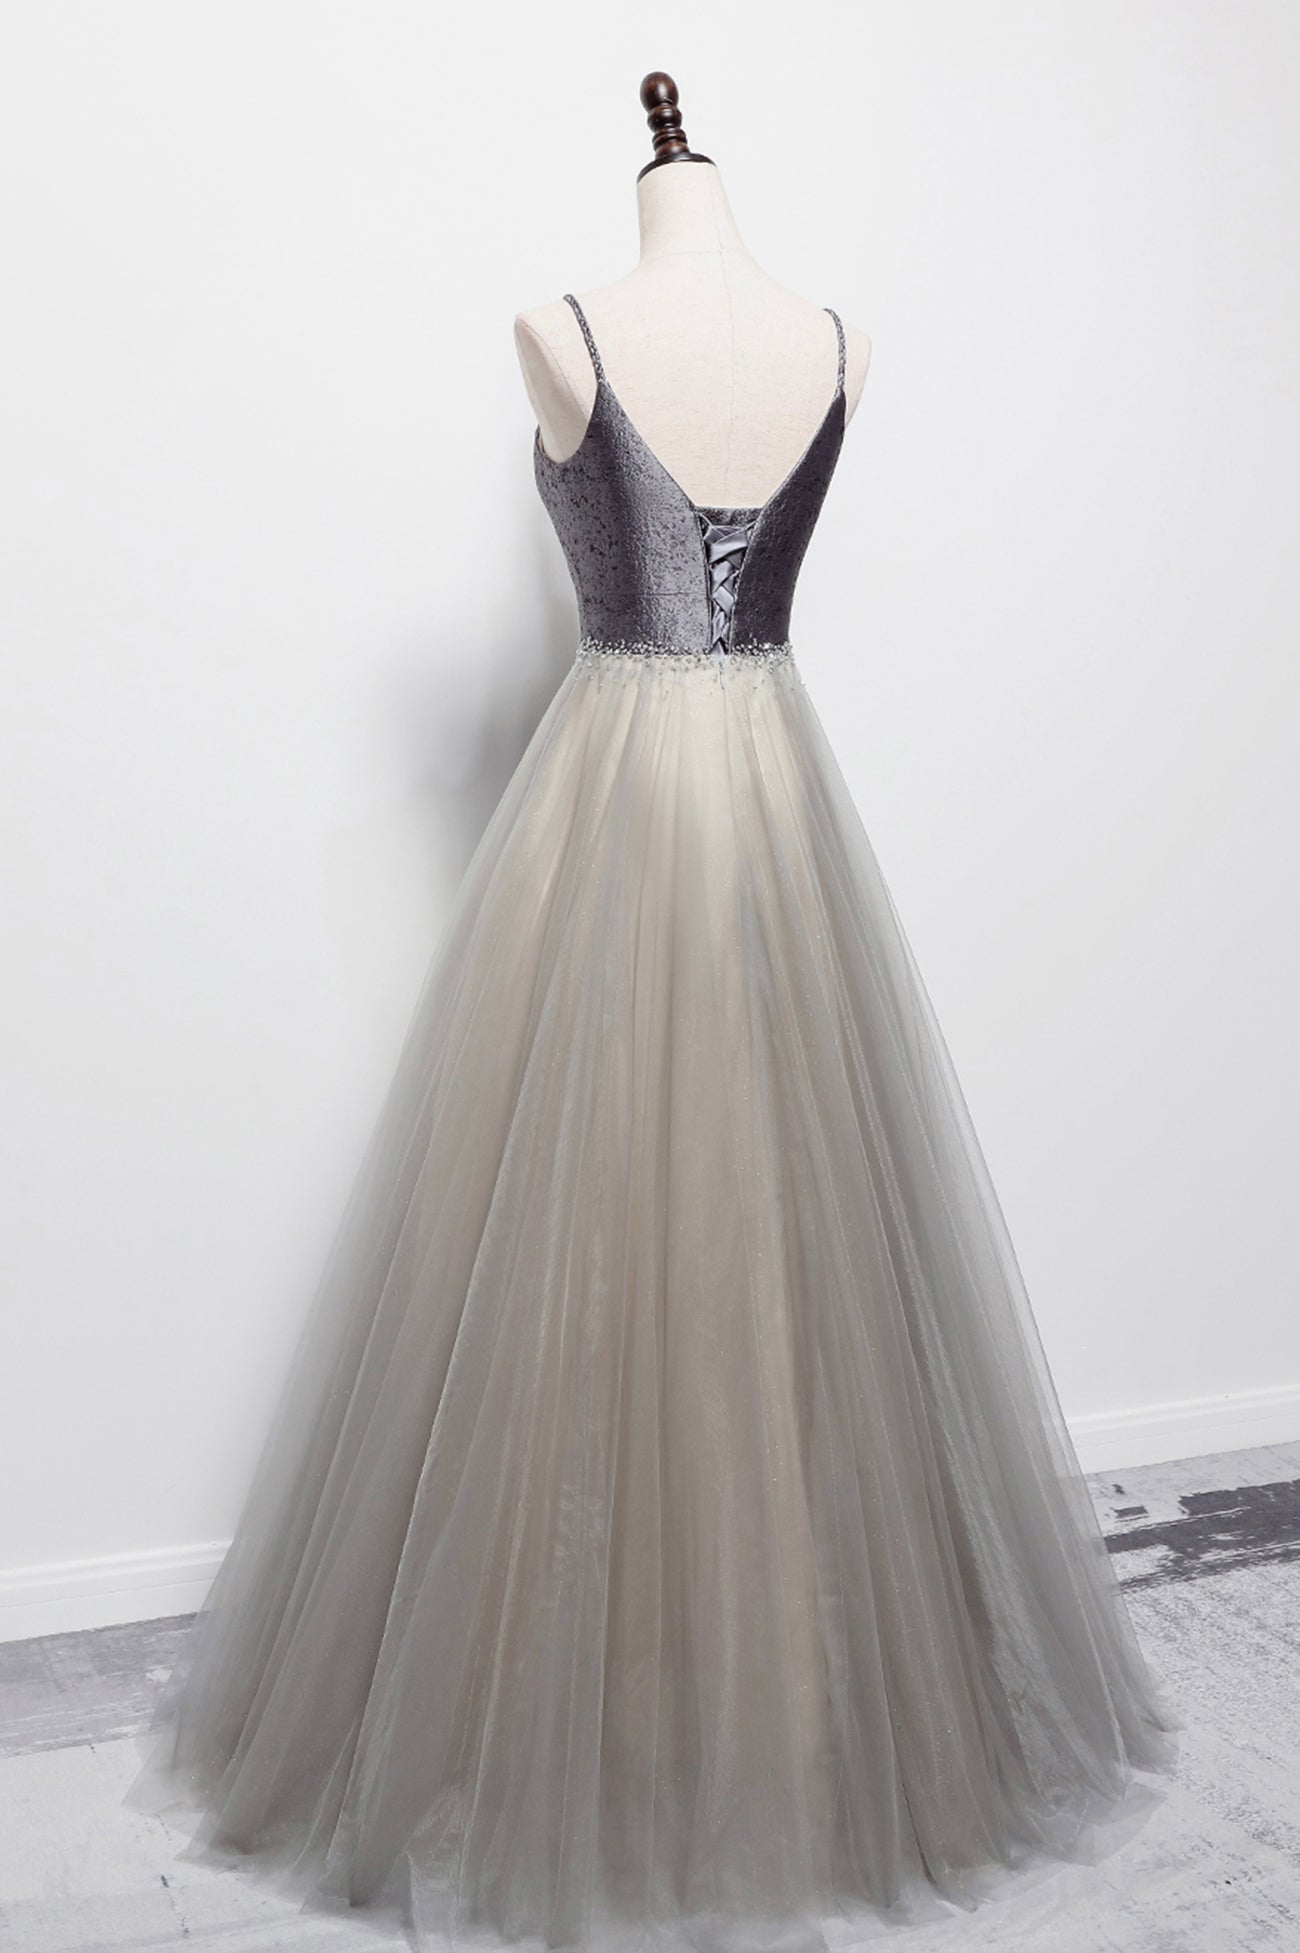 Gray Tulle Long A-Line Prom Dress, V-Neck Spaghetti Straps Evening Dress